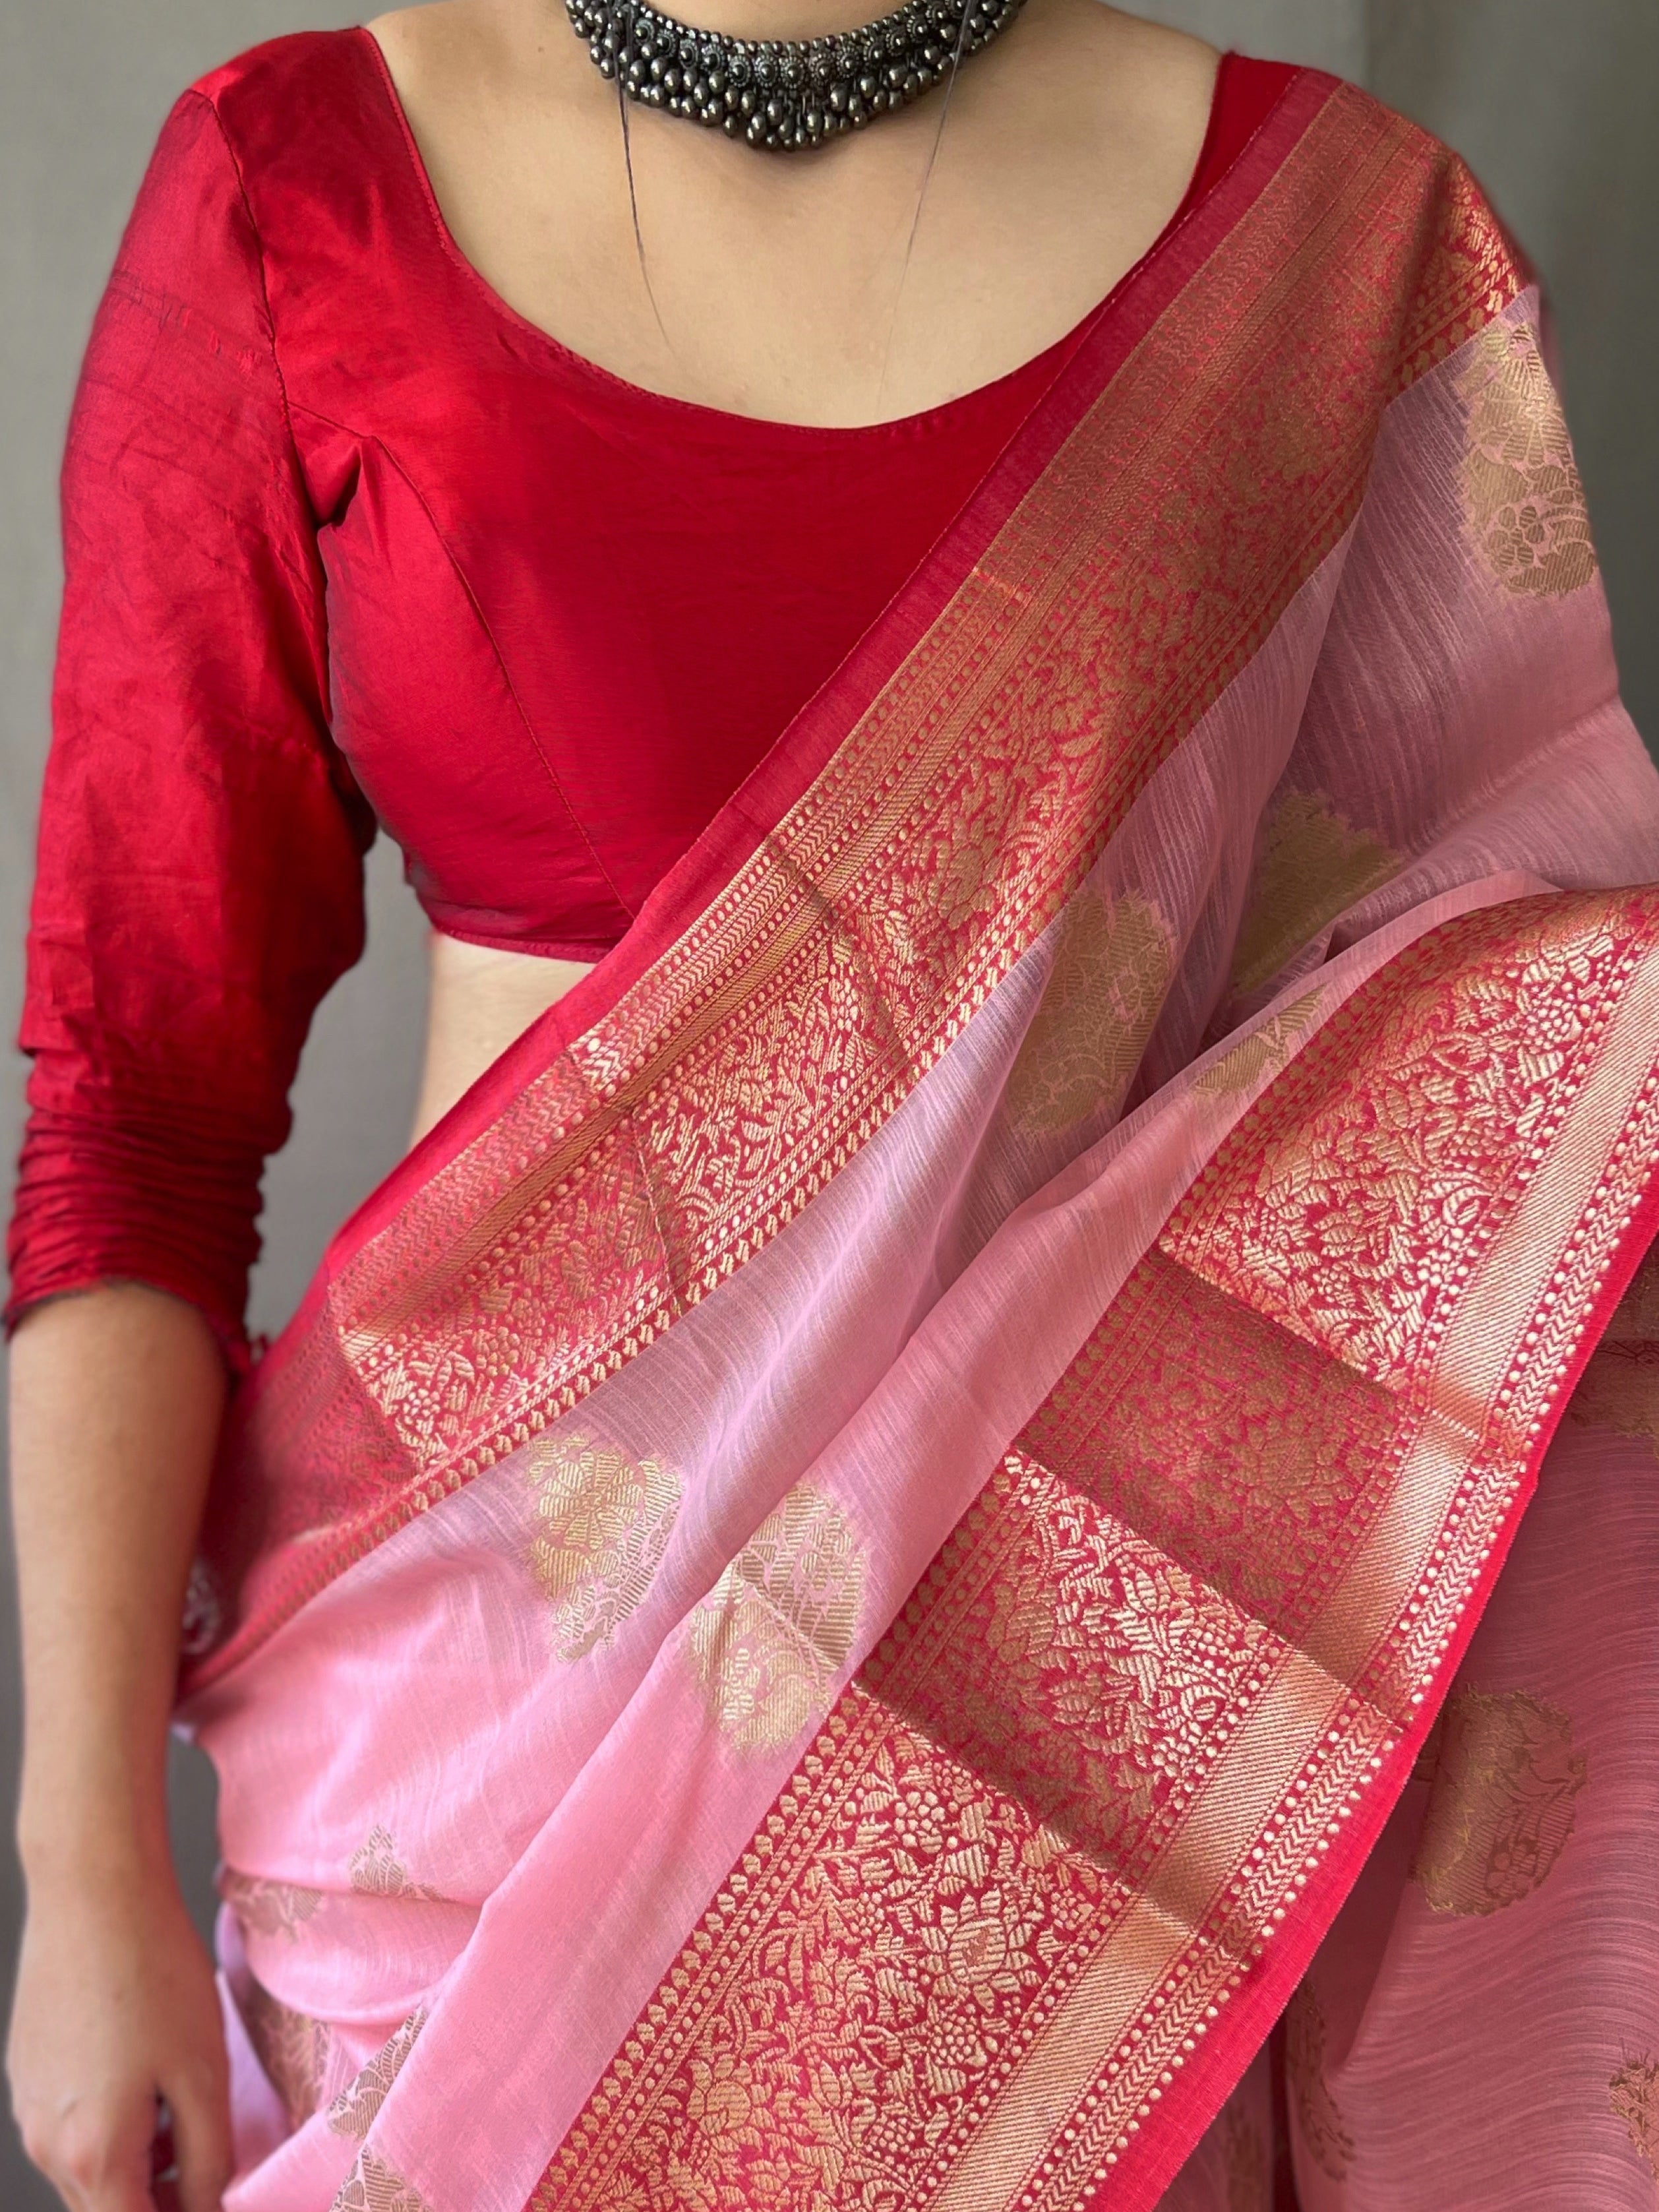 Women's Linen Contrast Woven Saree Pink - Tasarika